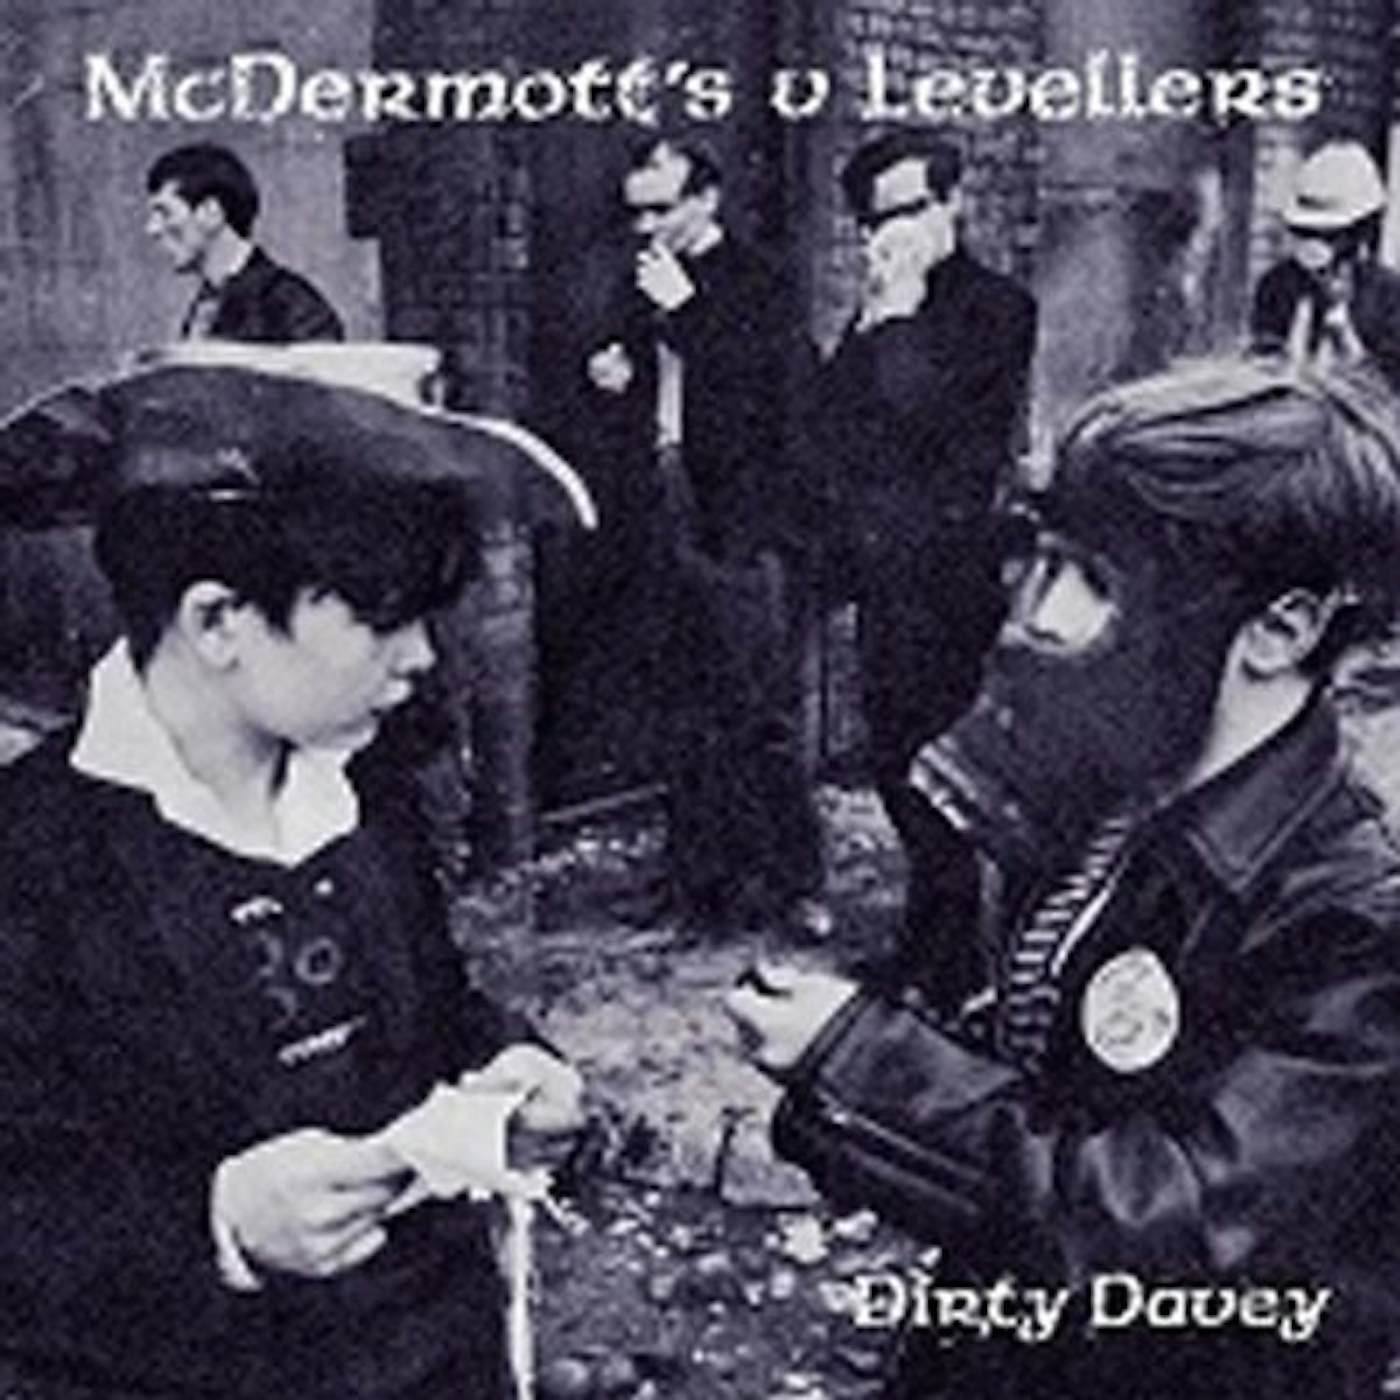 McDermott's 2 Hours v Levellers DIRTY DAVEY/DIRTY DAVEY LIVE Vinyl Record